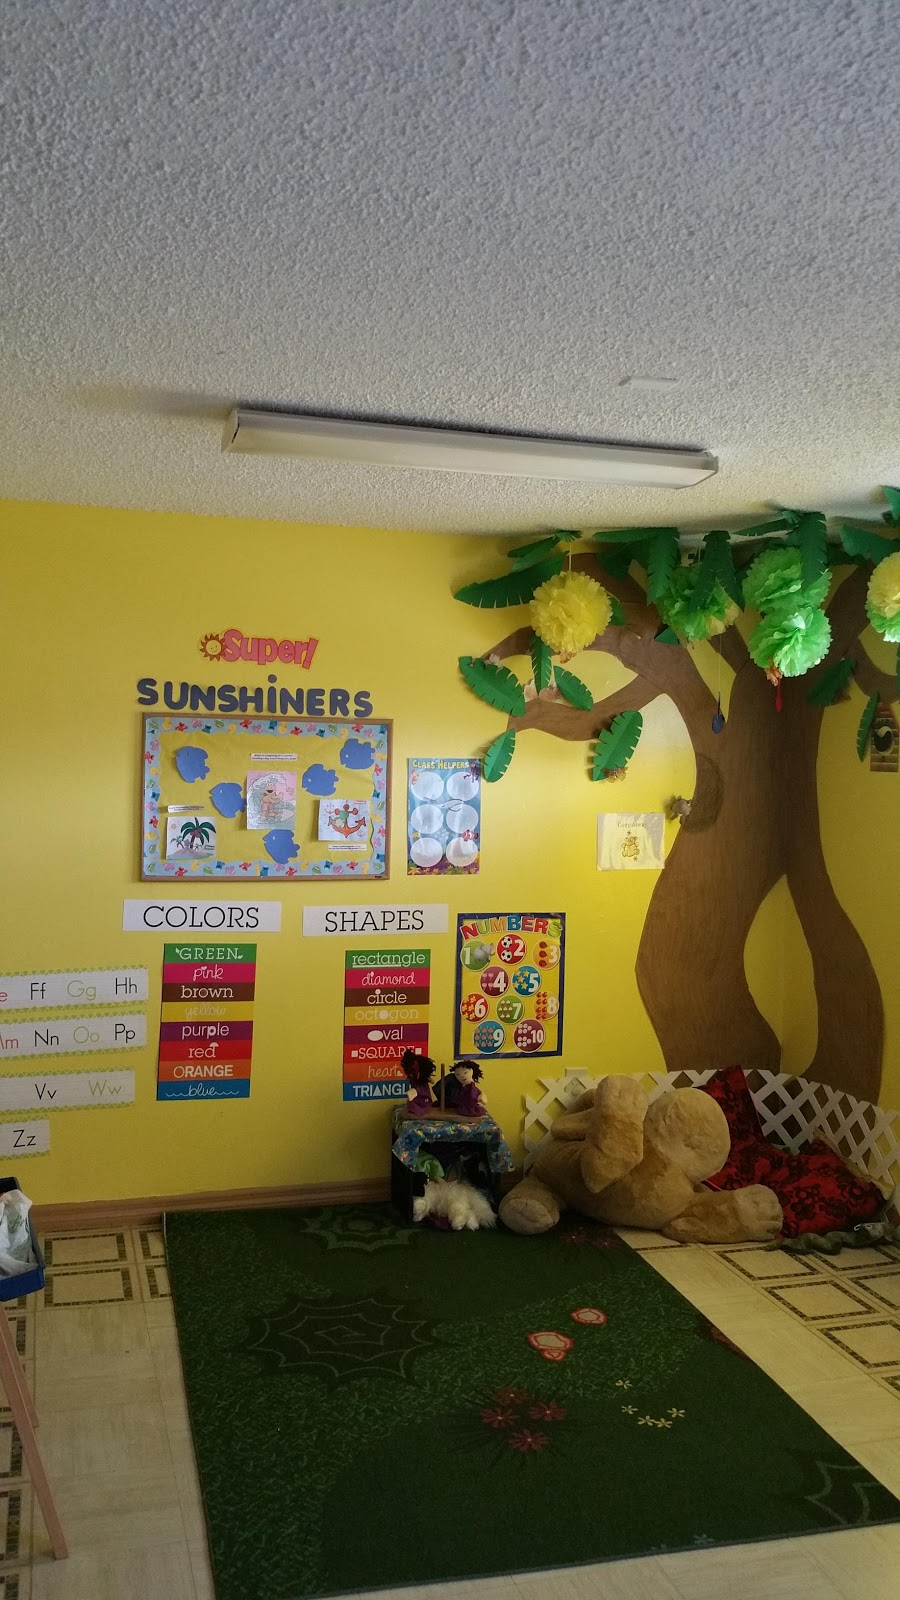 Kids Connect Childcare Center | 4527 Carter St, Orlando, FL 32811, USA | Phone: (407) 298-2300